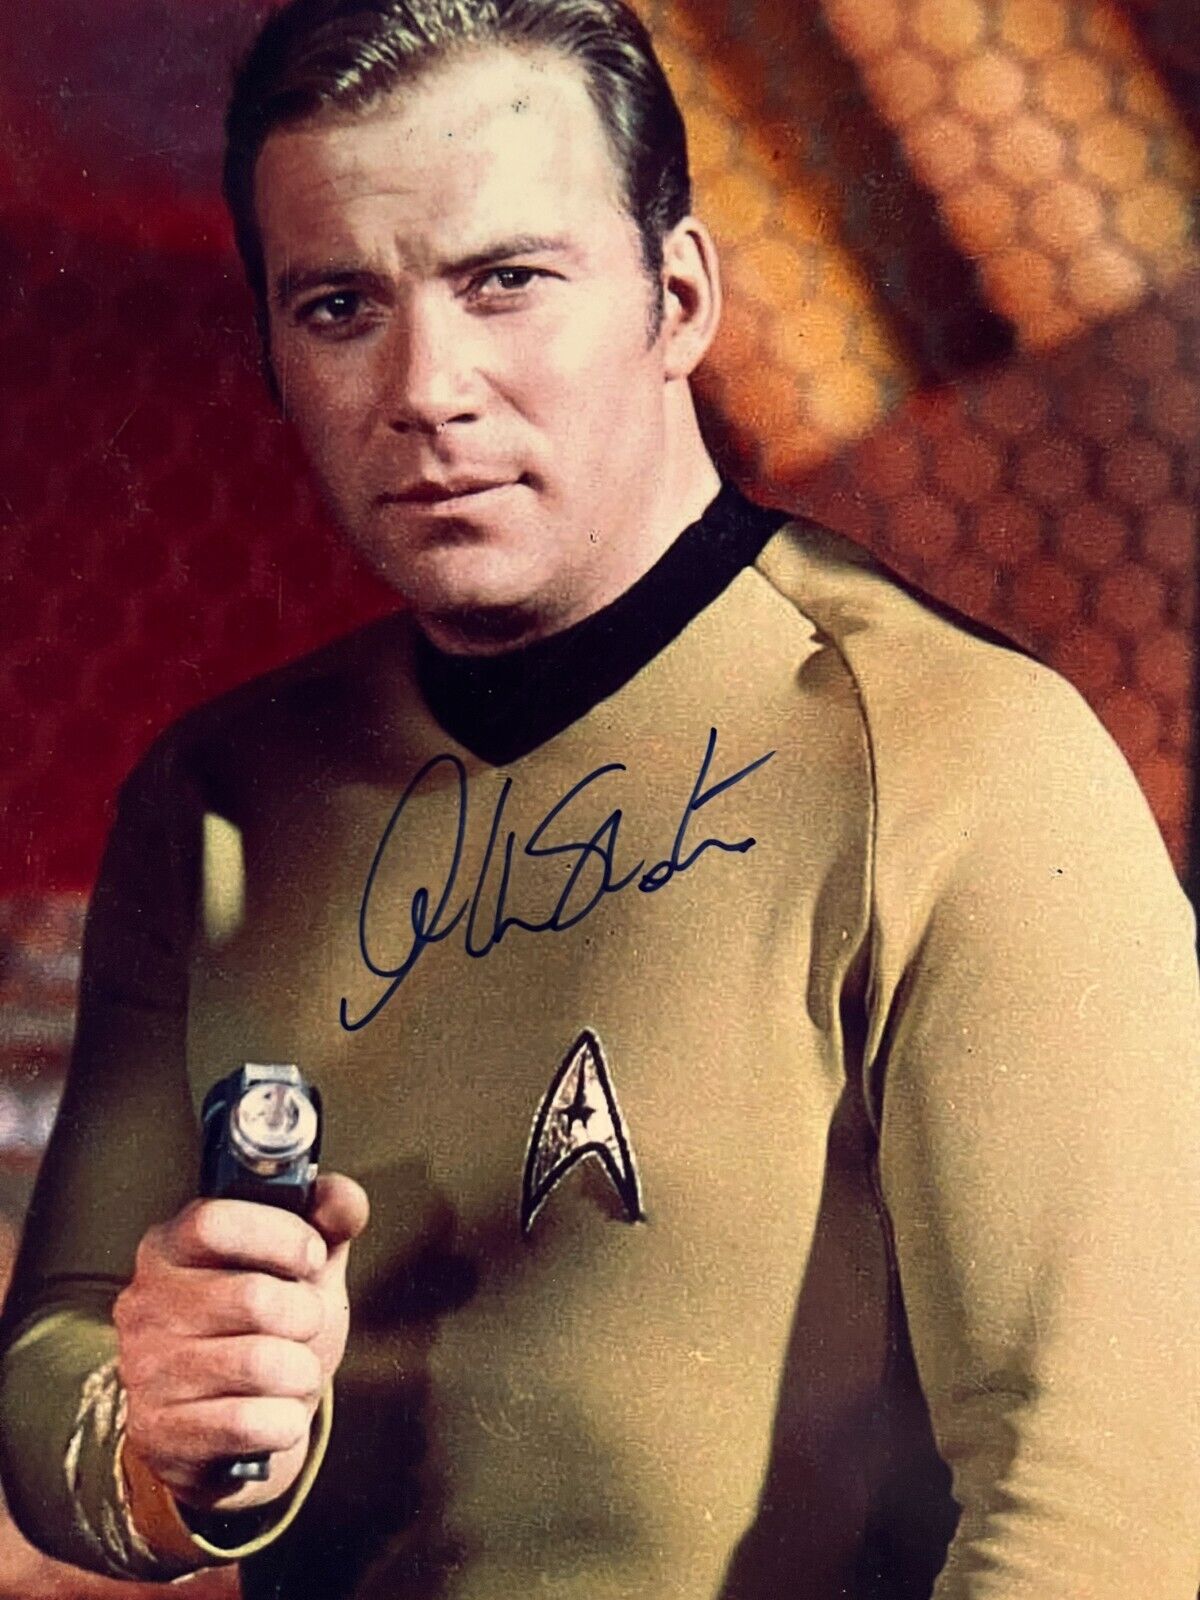 Star Trek William Shatner signed photo. 8x10 inches